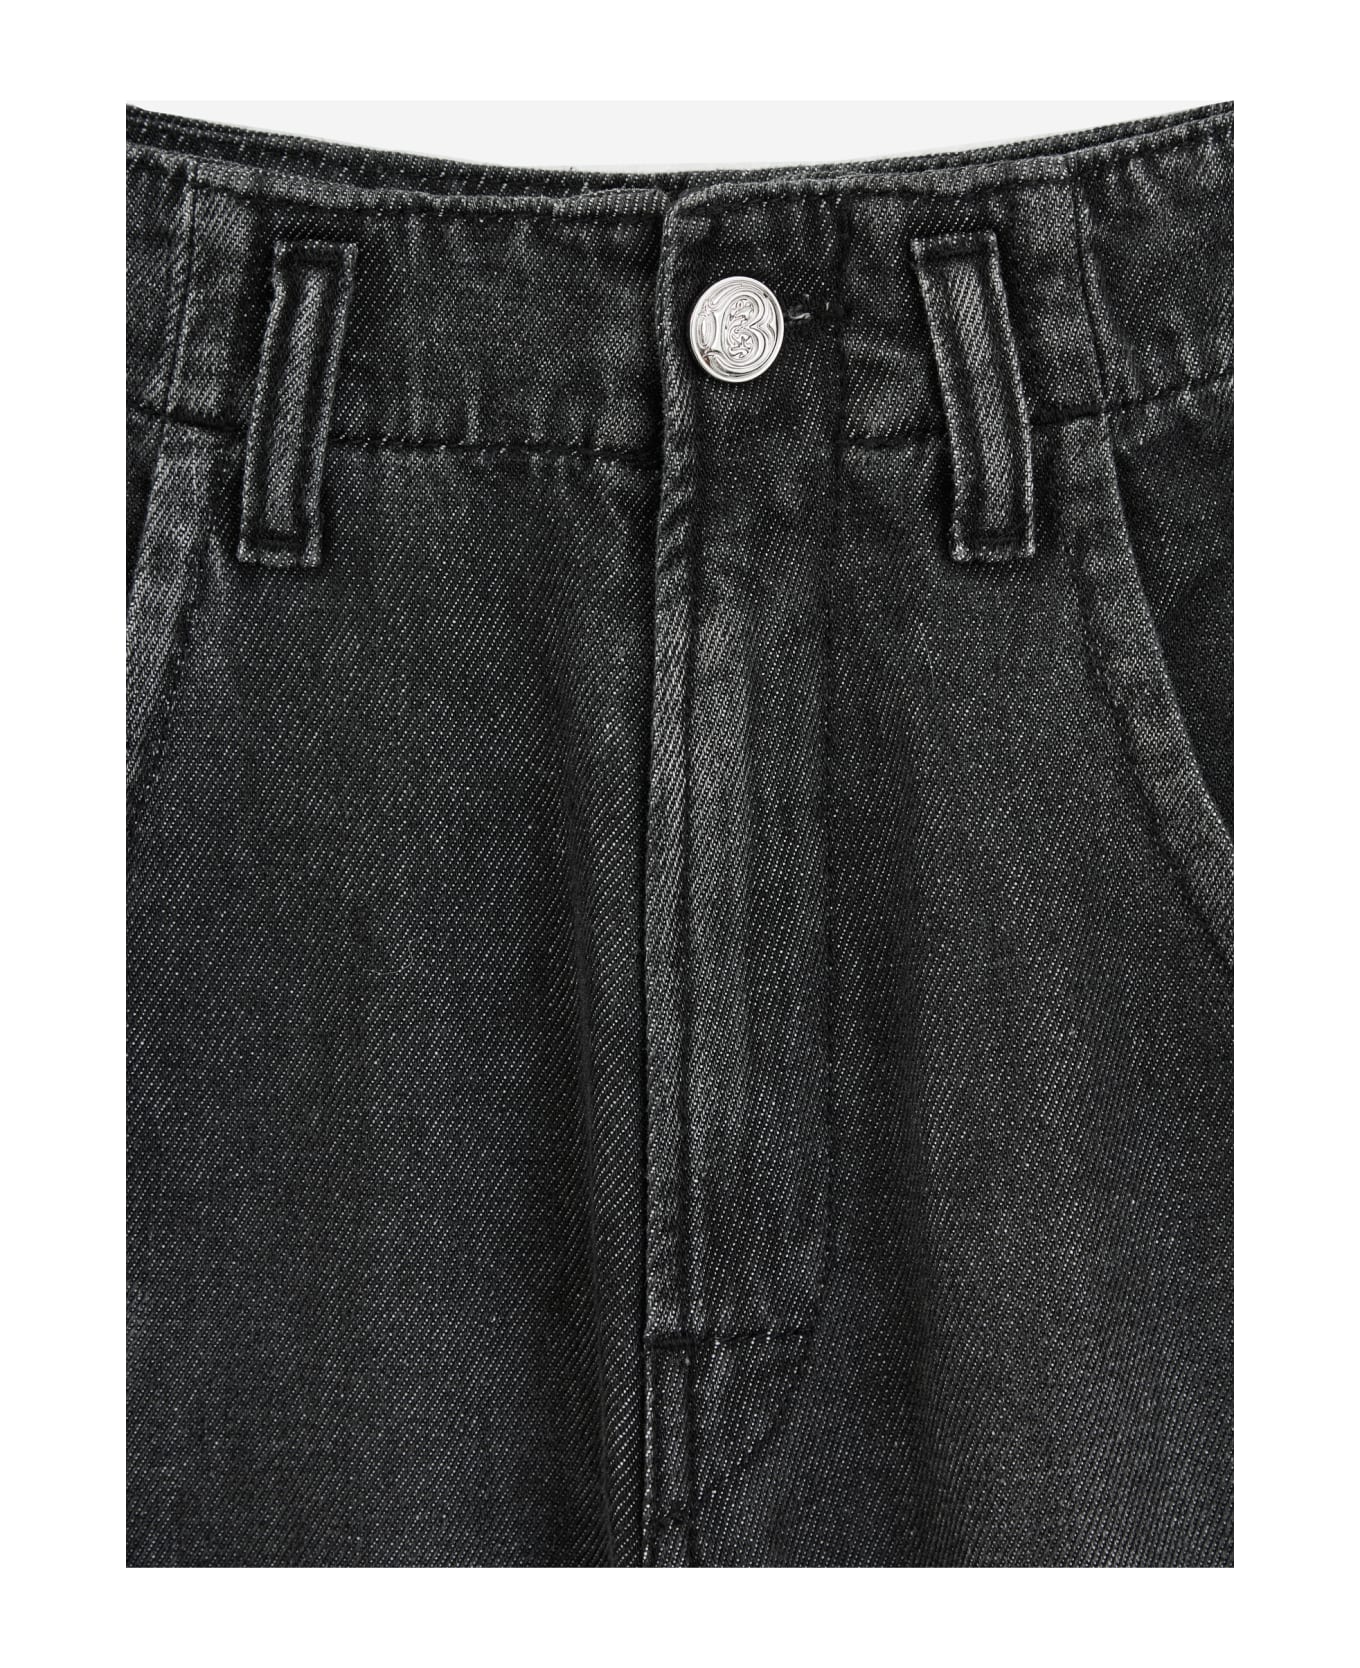 Bluemarble Studded Baggy Denim Jeans - black デニム